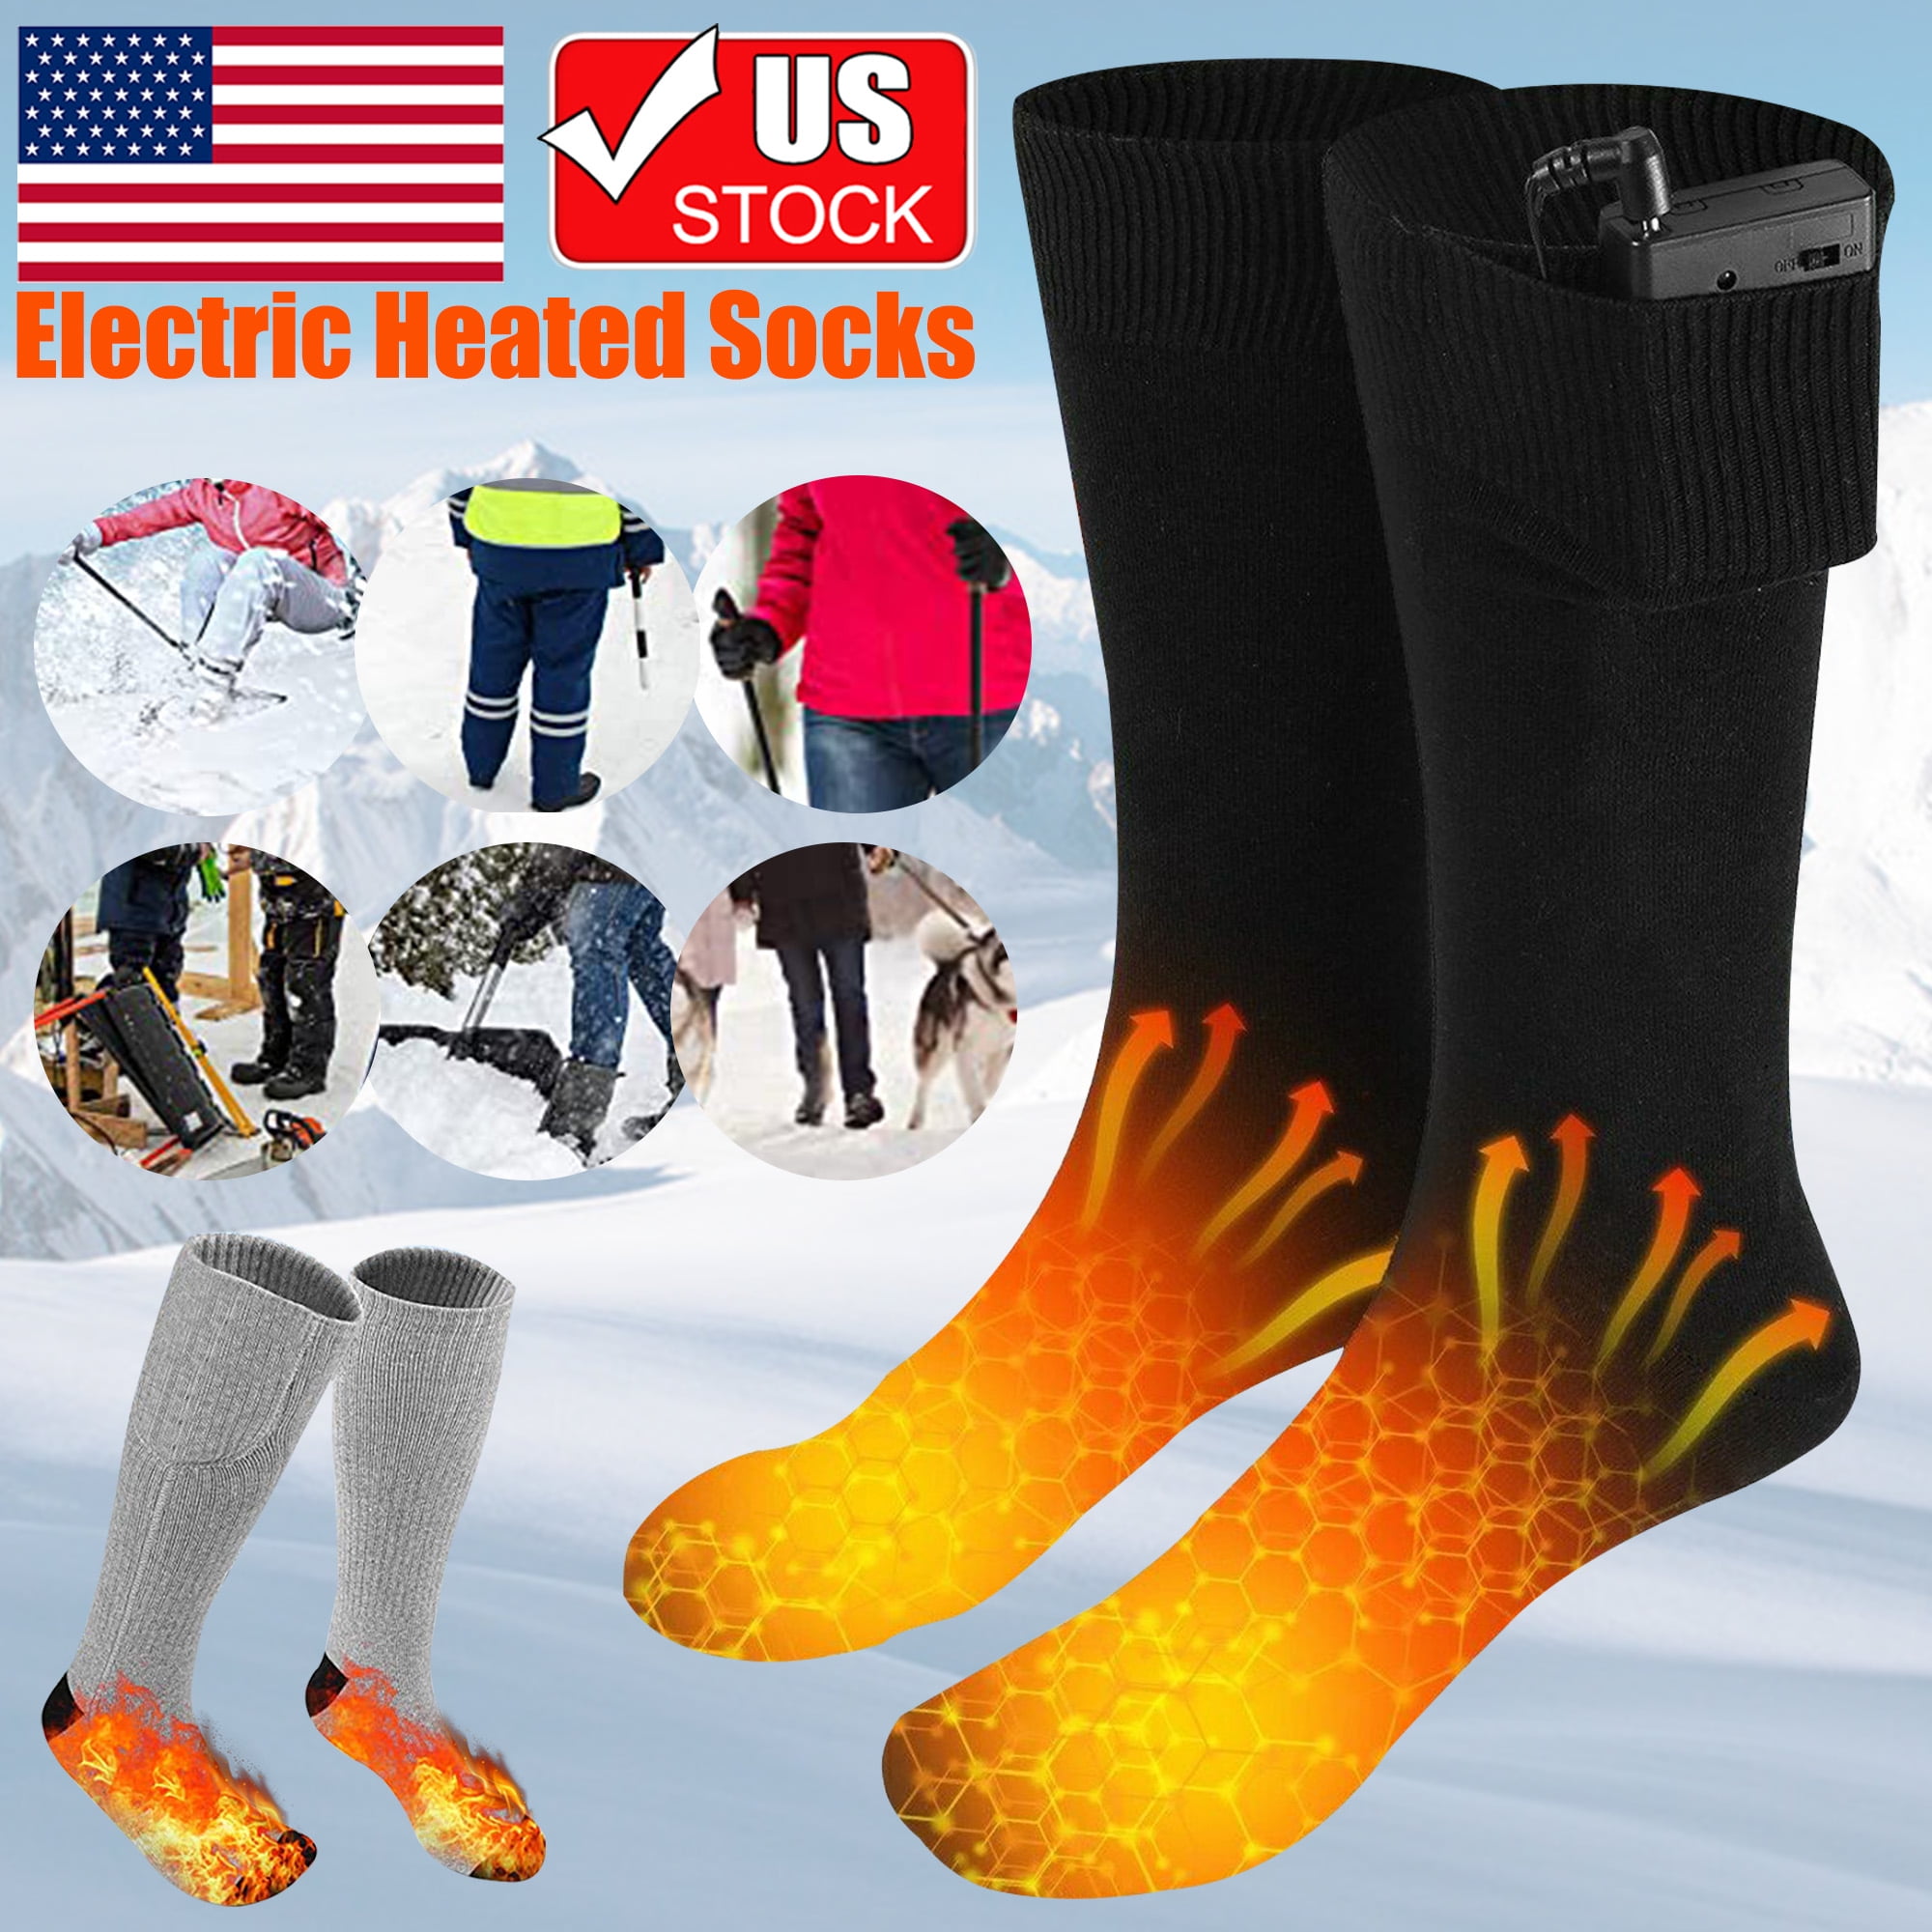 5V Unisex Electric Heated Socks Rechargeable Battery Foot Winter Warmer Socks US 